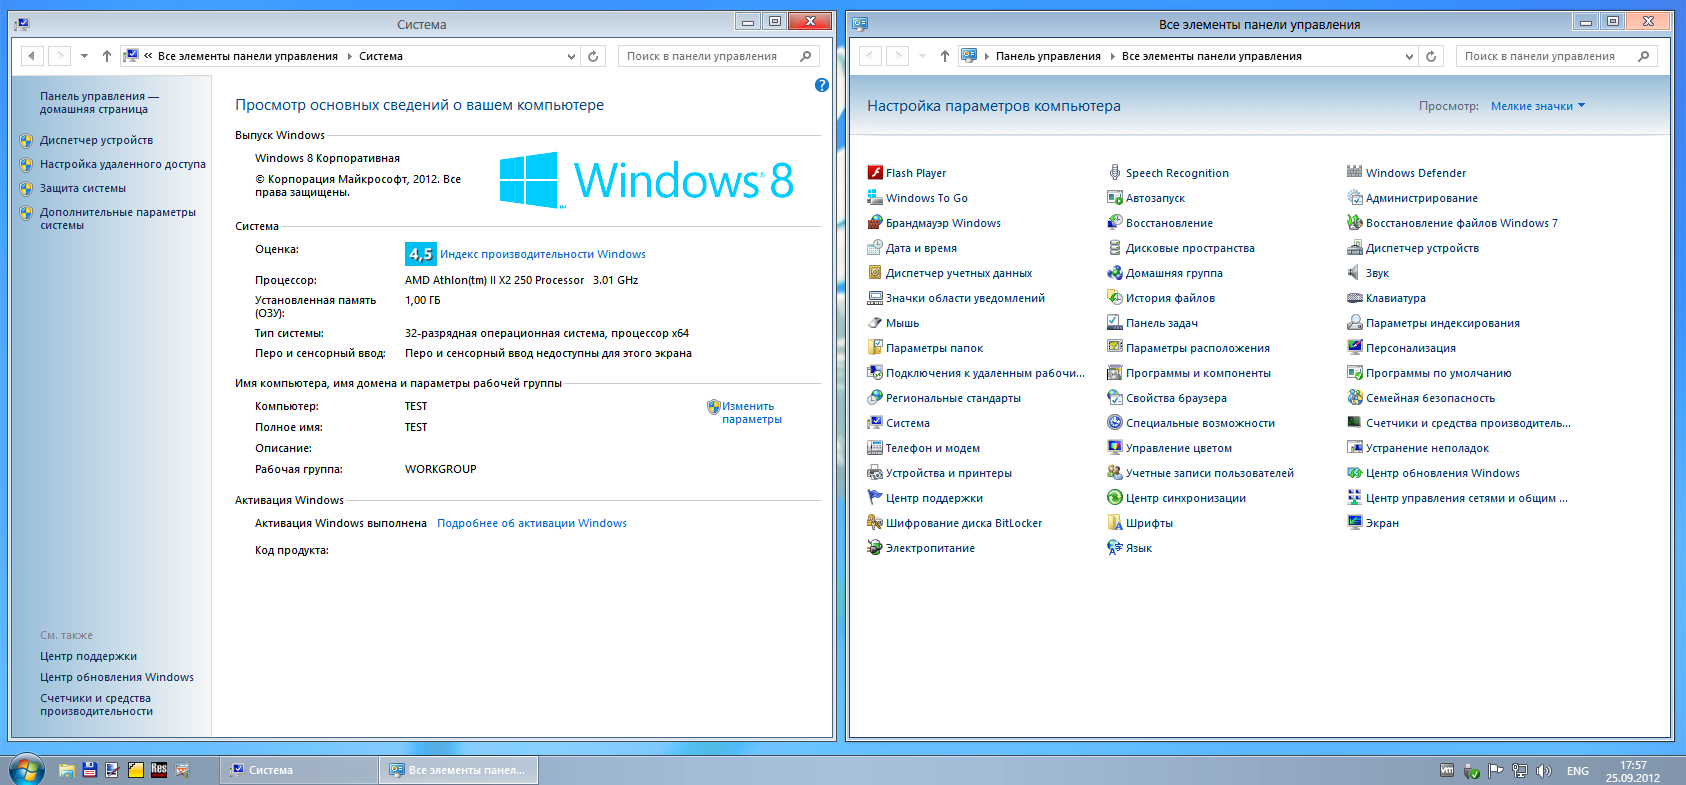 Free desktop themes windows 8